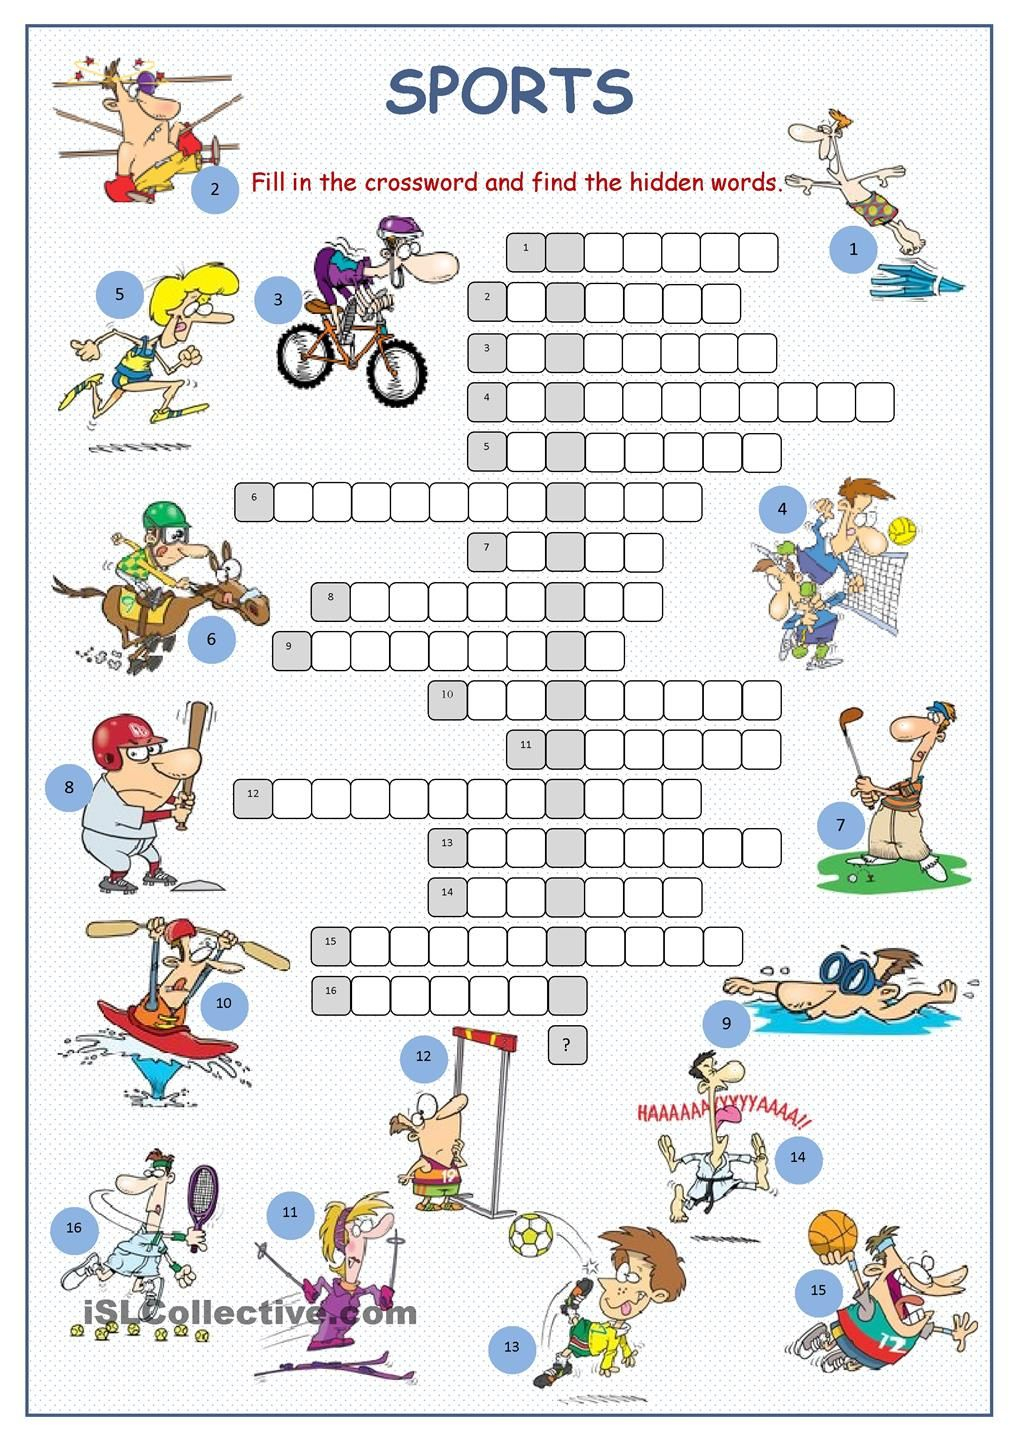 Sports Crossword Puzzle | English | Sports Crossword, Sport English - Printable Crossword Puzzles For Learning English